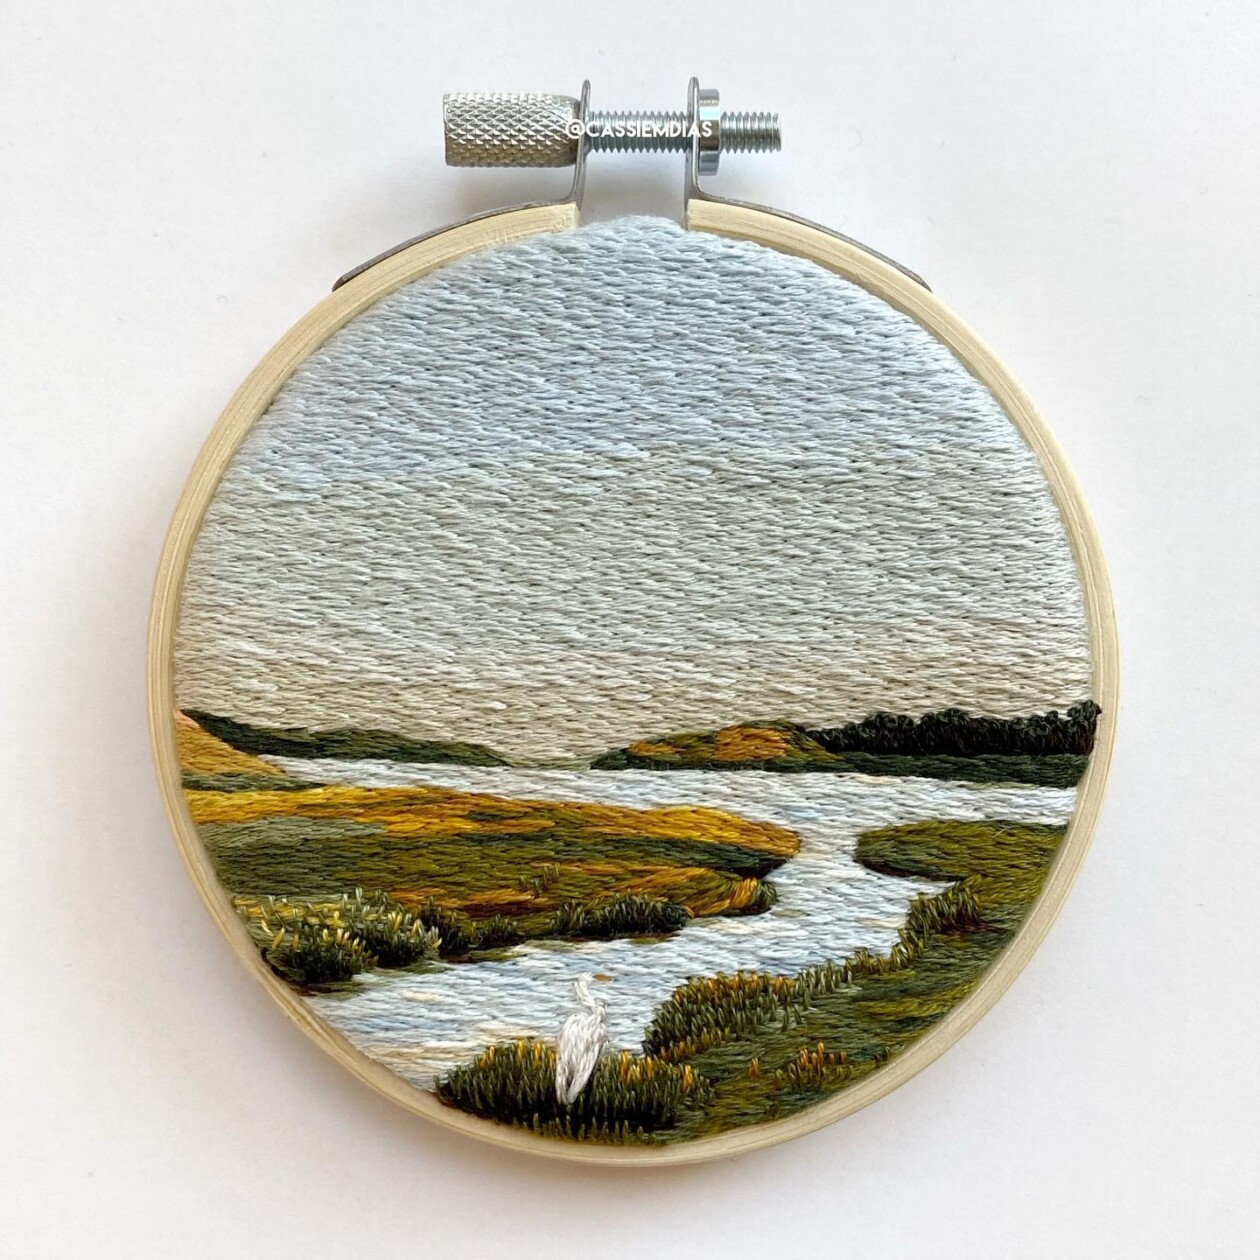 Wonderful Impressionistic Landscape Embroideries By Cassandra Dias (2)